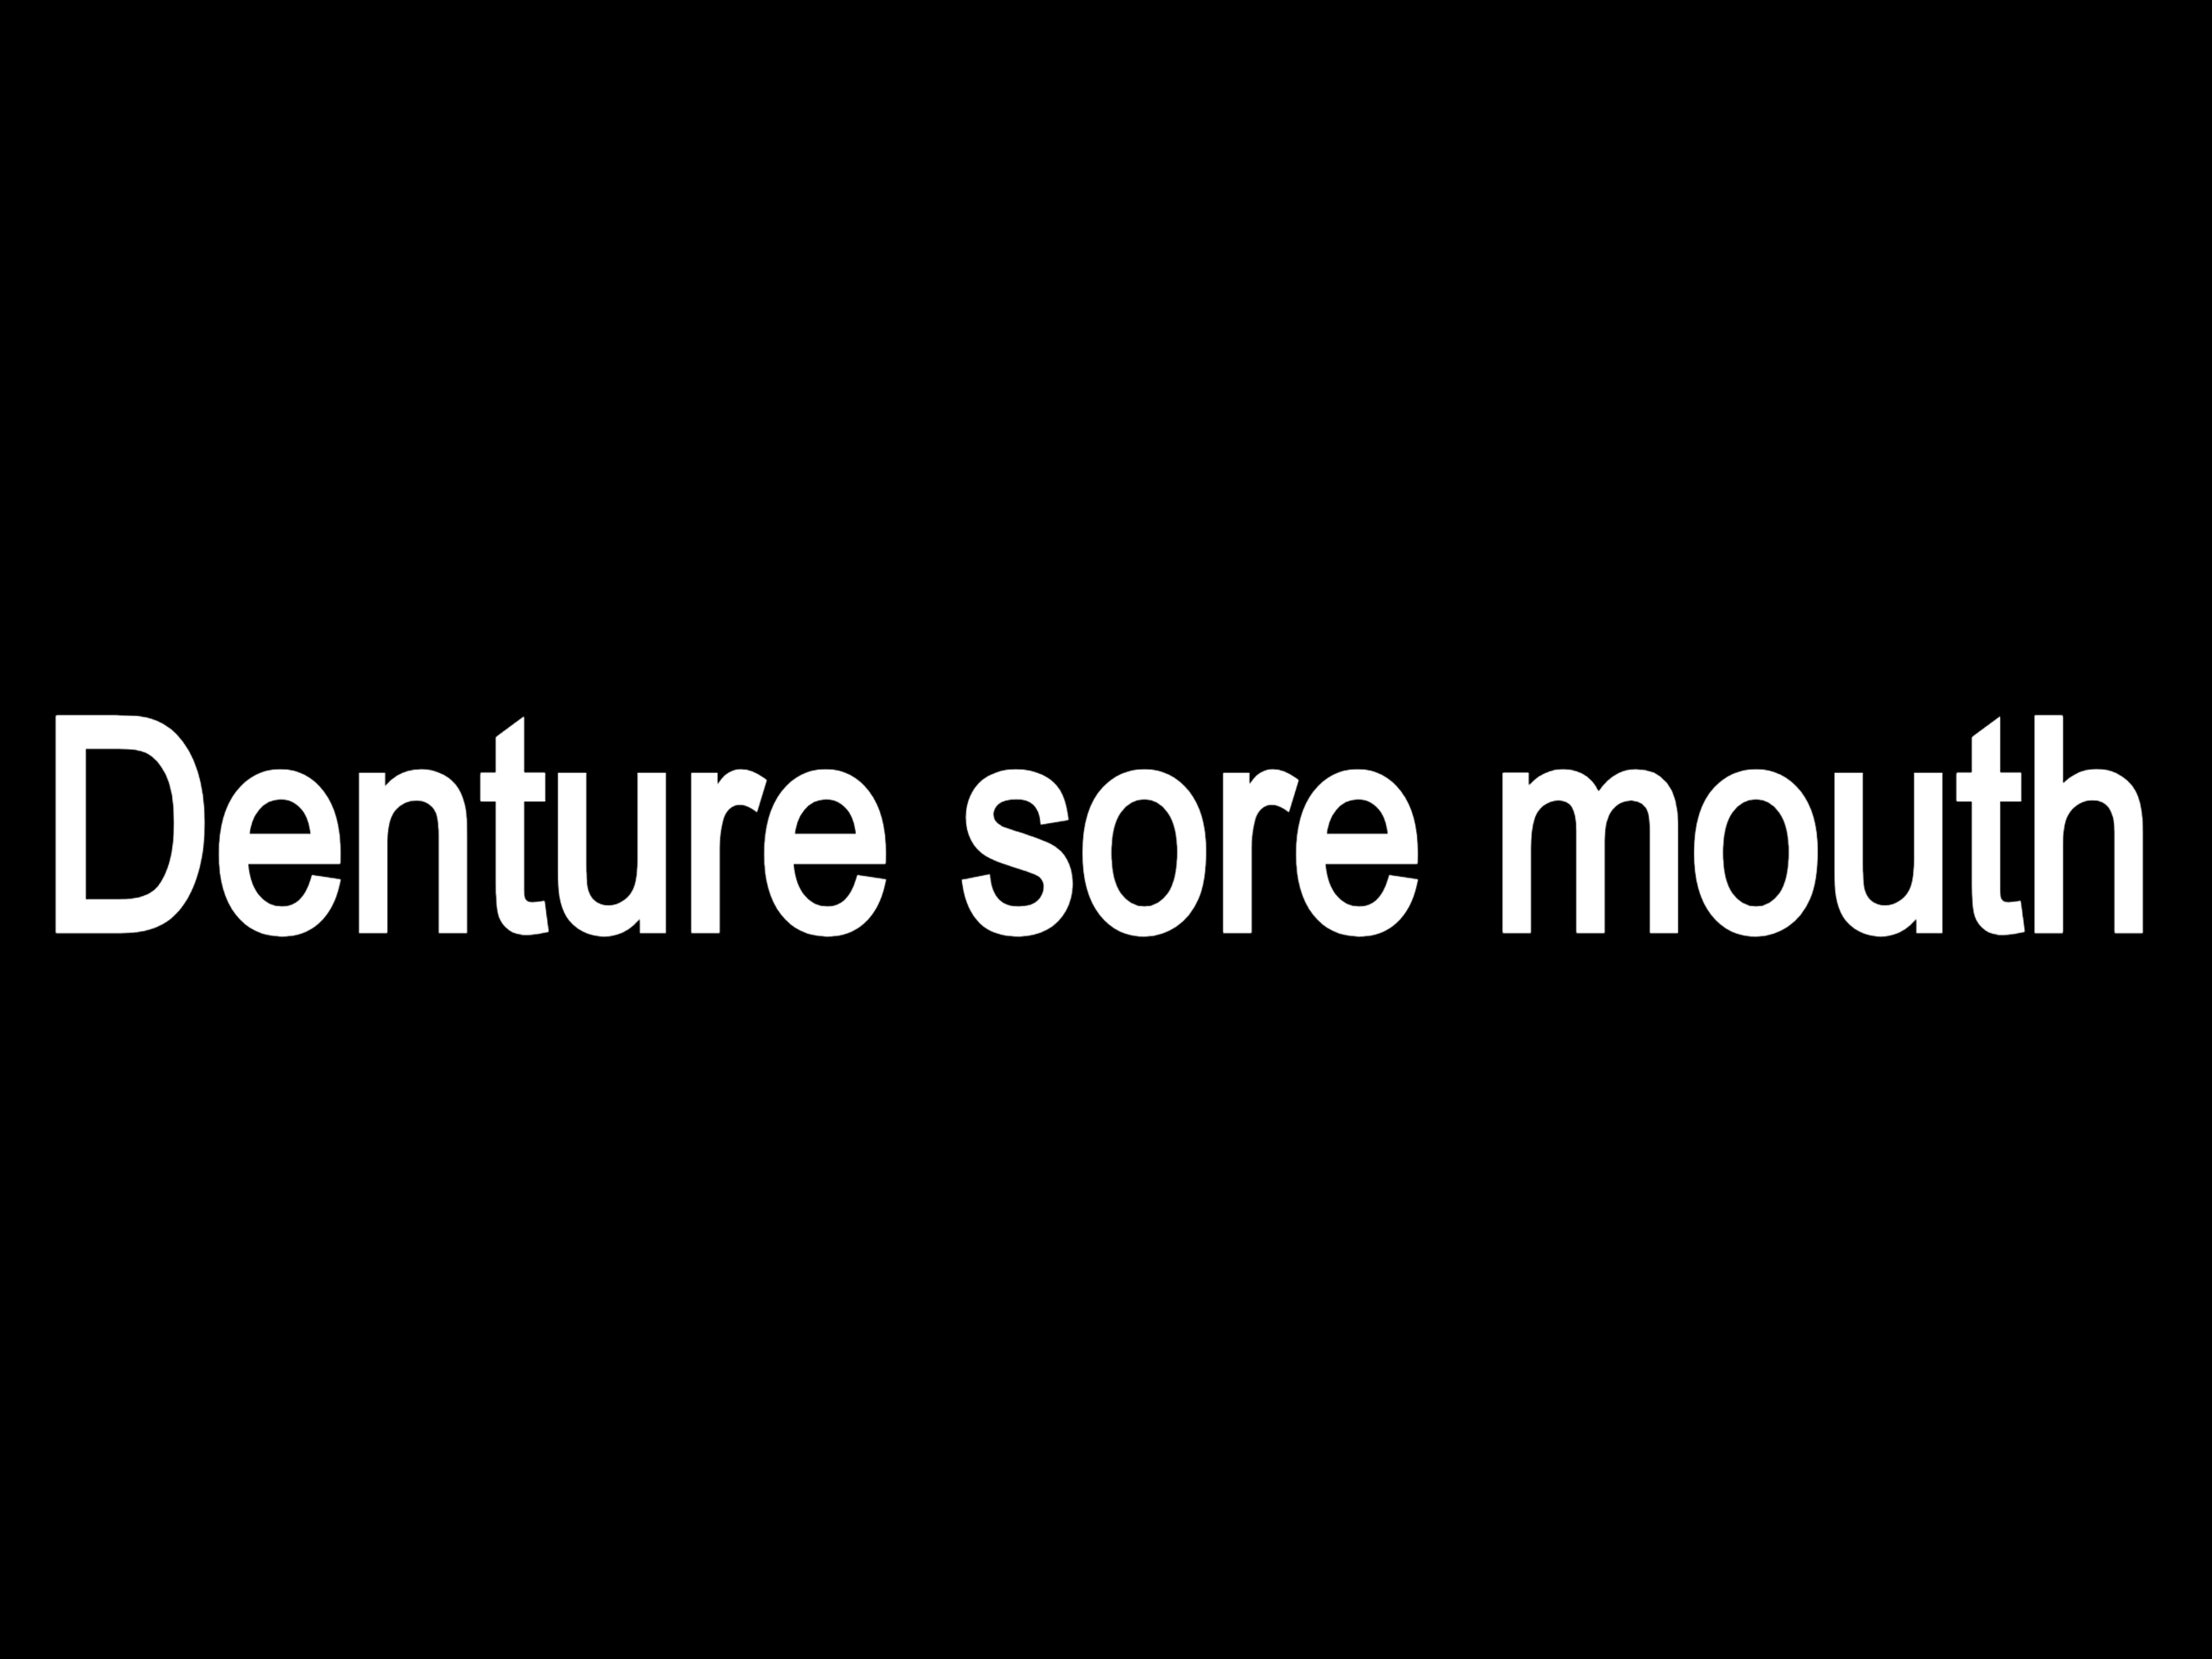 Denture sore mouth